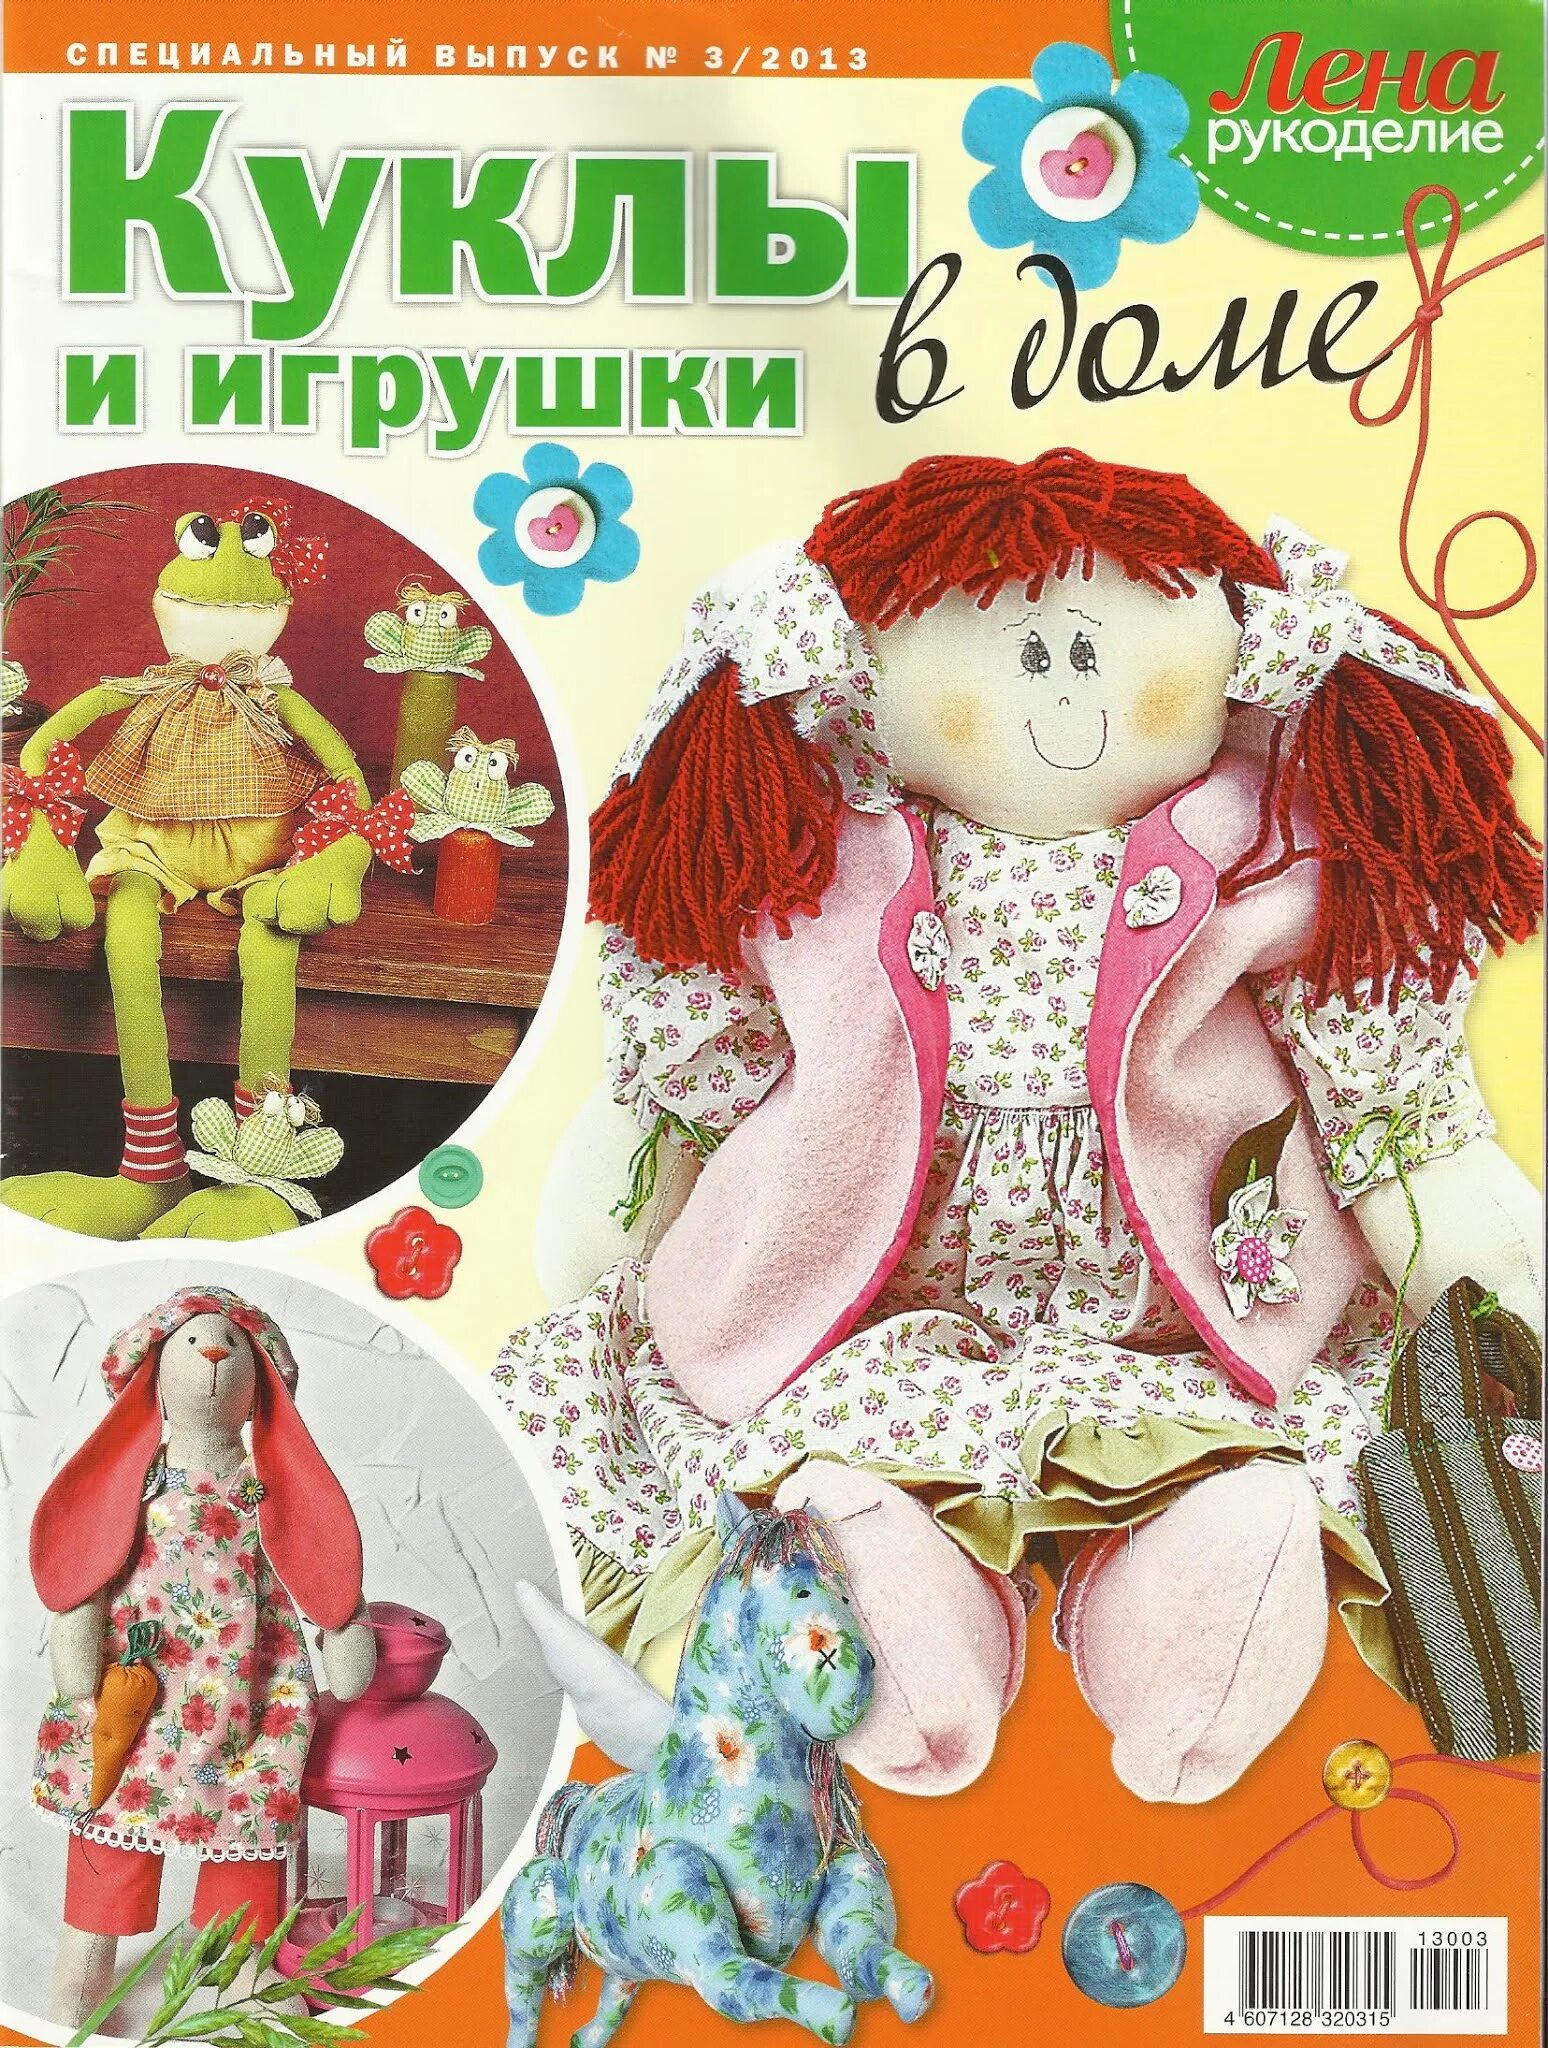 Лене купили куклу. Куклы и игрушки Лена рукоделие. Журнал Лена рукоделие куклы и игрушки. Журнал Лена куклы и игрушки в доме. Книги для кукол.